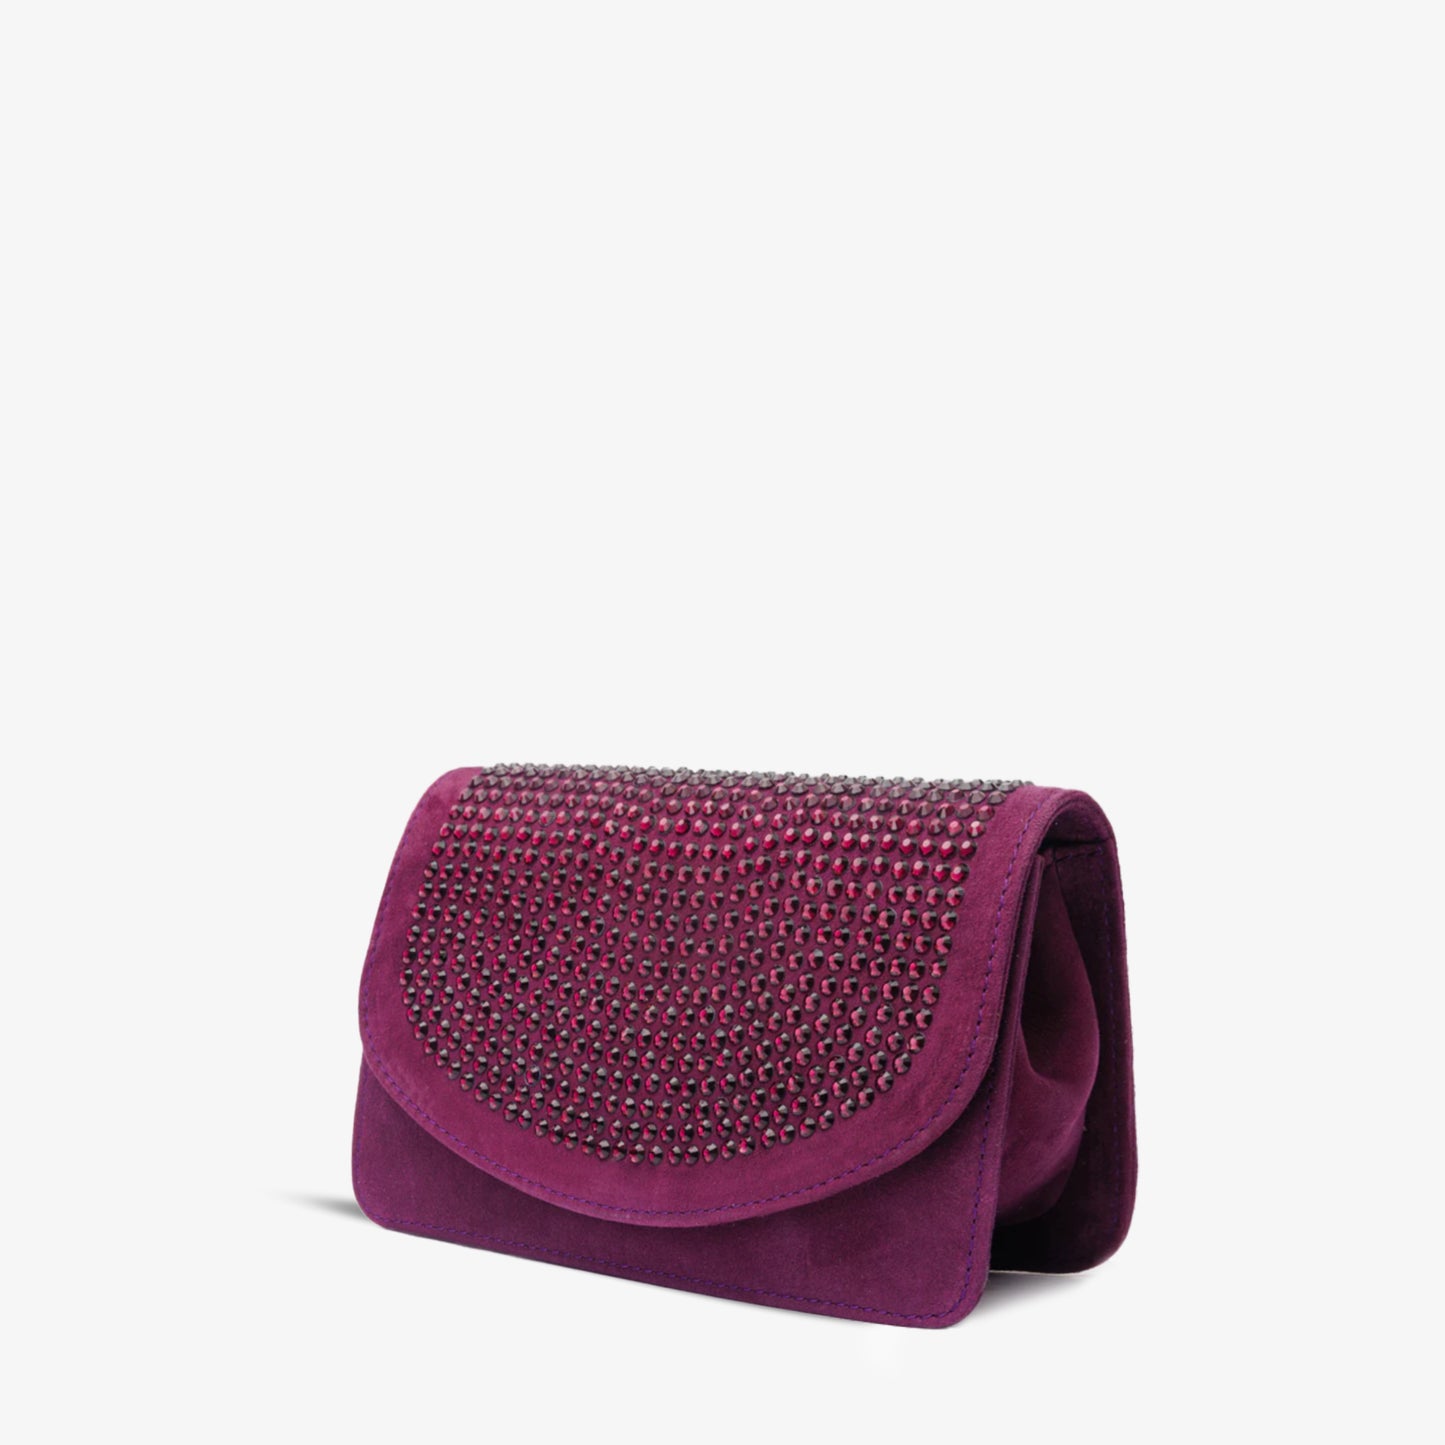 The Ailano Purple Leather Handbag